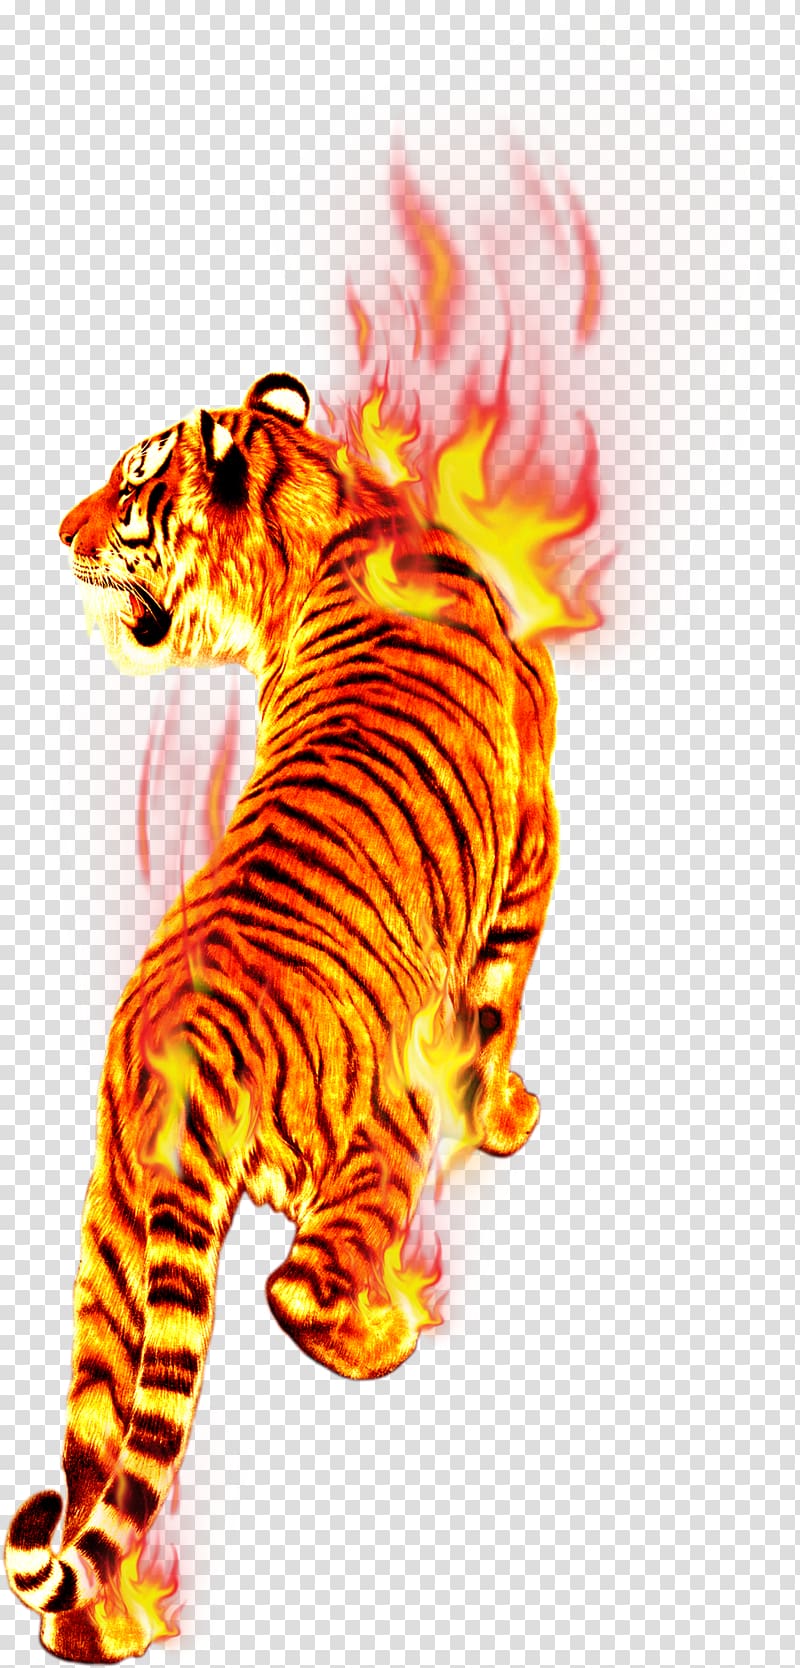 burning tiger , Flame Fire Tiger Combustion, Tiger in flames transparent background PNG clipart